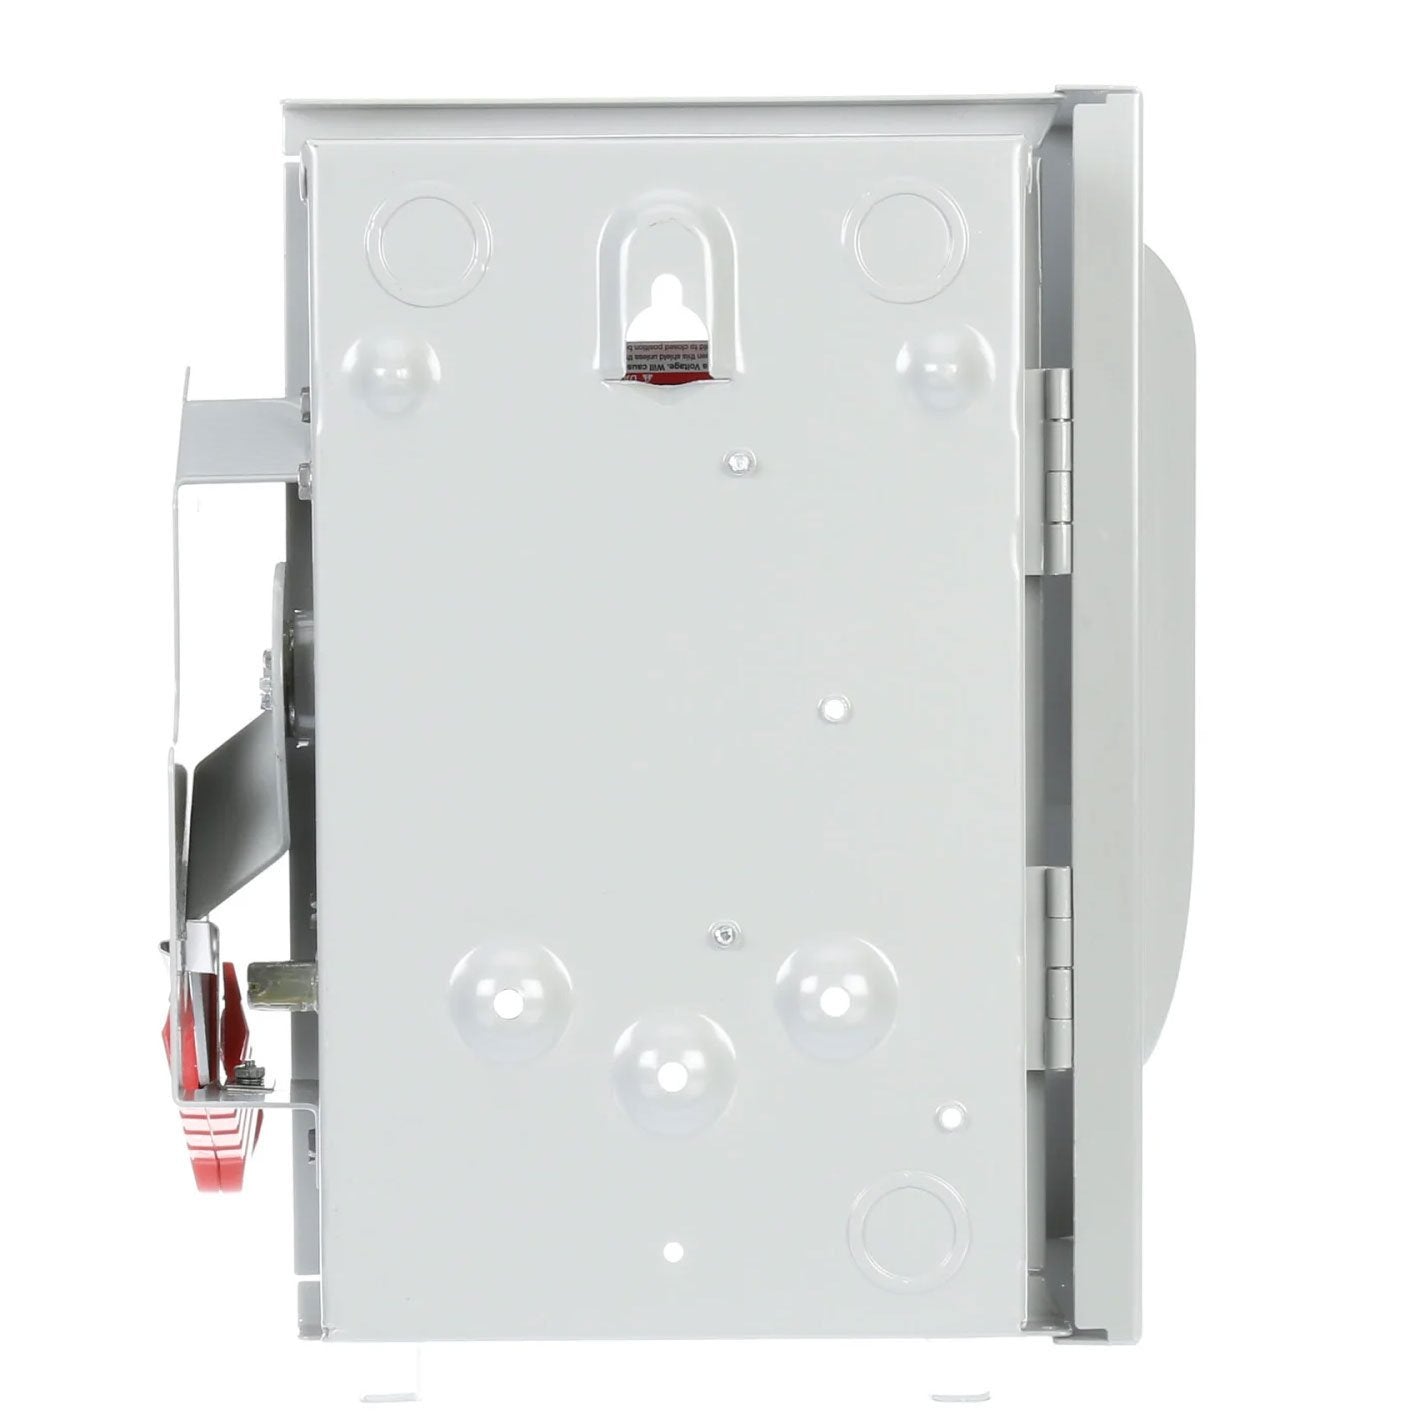 HNFC361 - Siemens - 30 Amp Disconnect Safety Switches